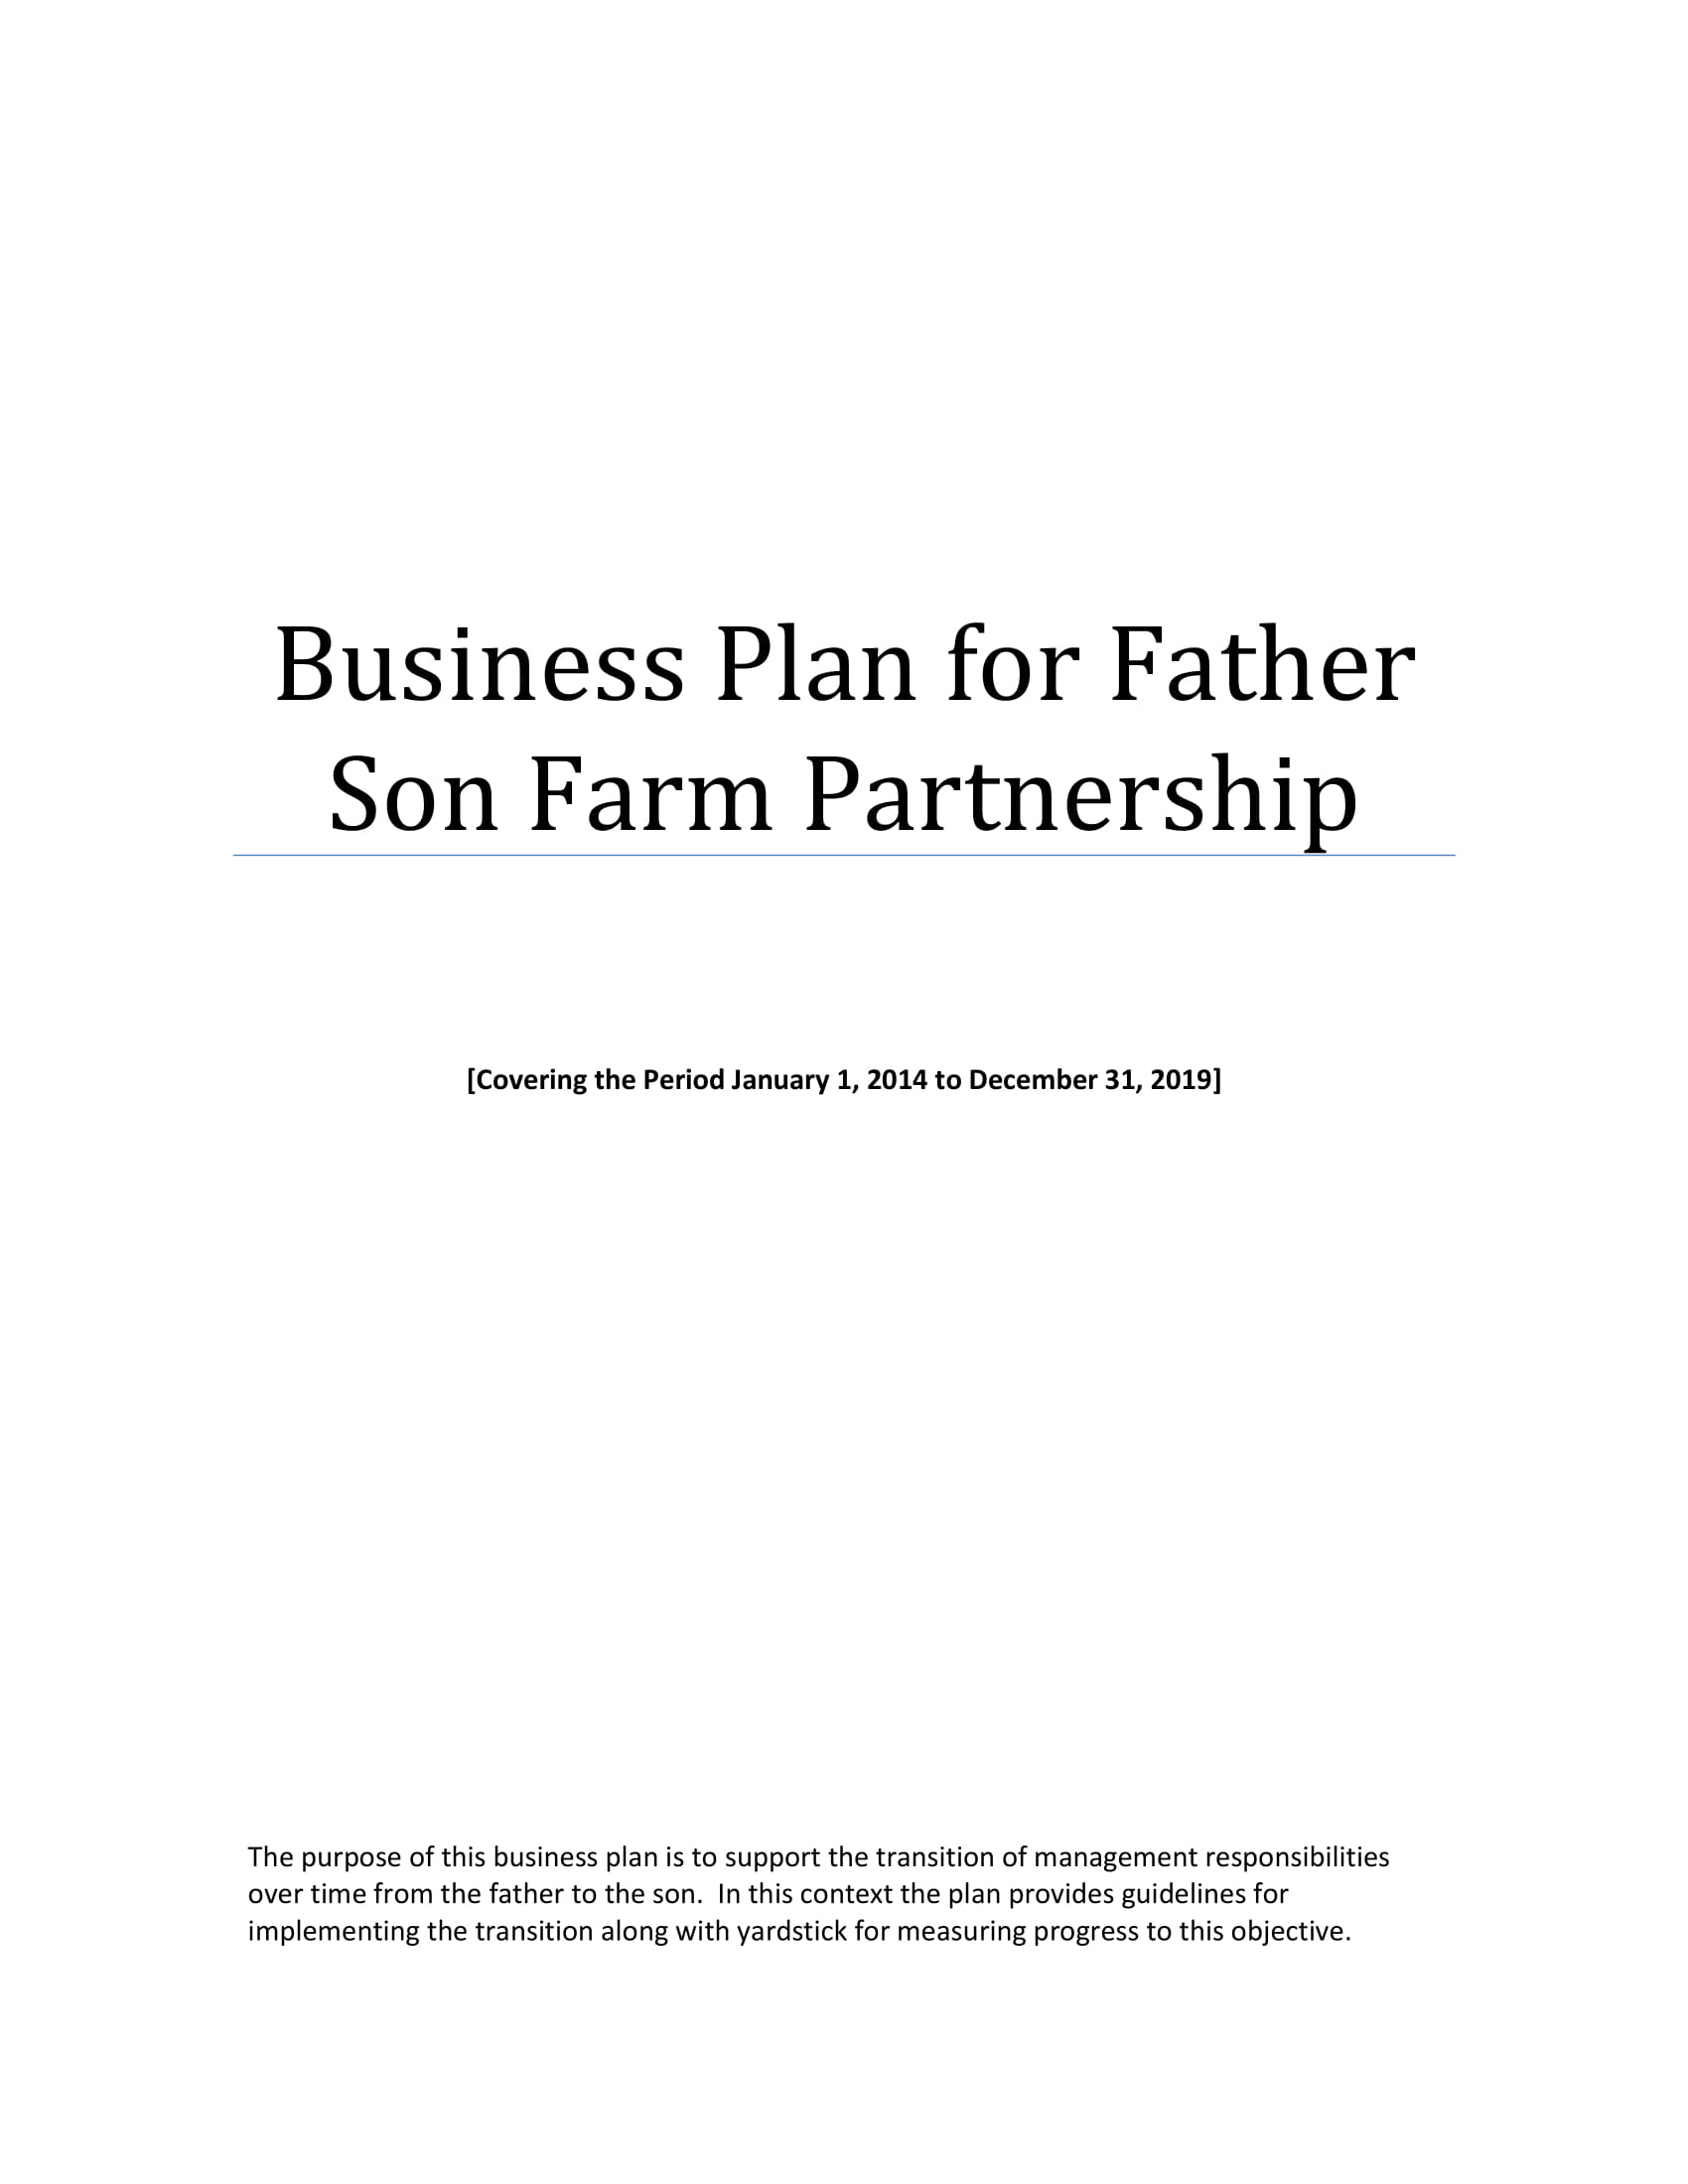 partnership business plan for farm management example 01